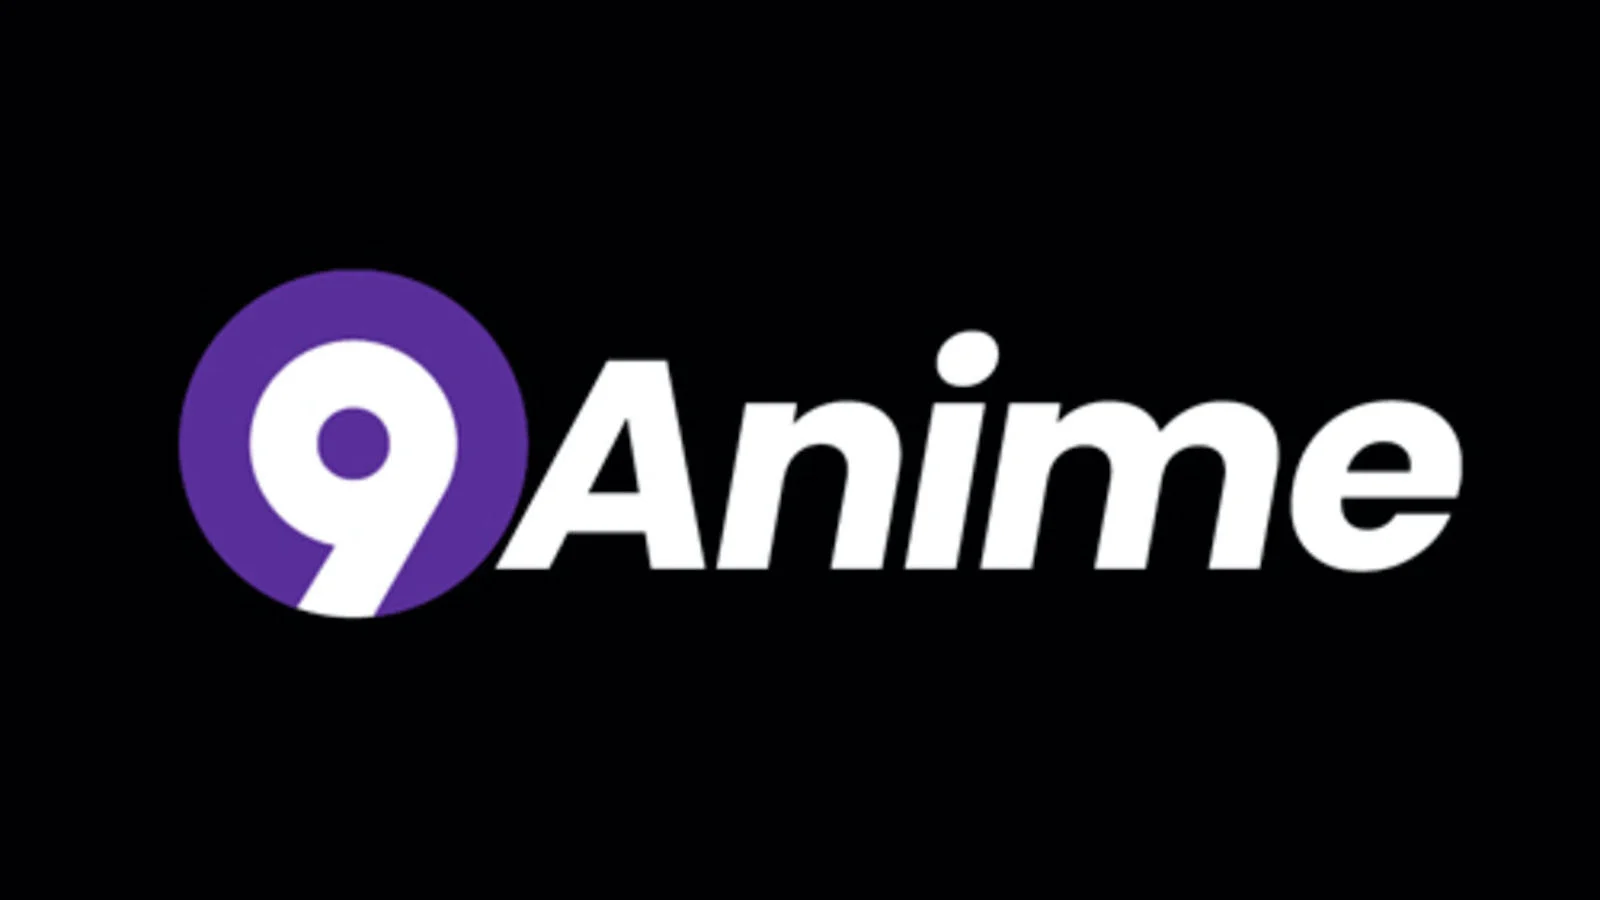 9Anime GG Alternatives: Top Free Anime Streaming Website